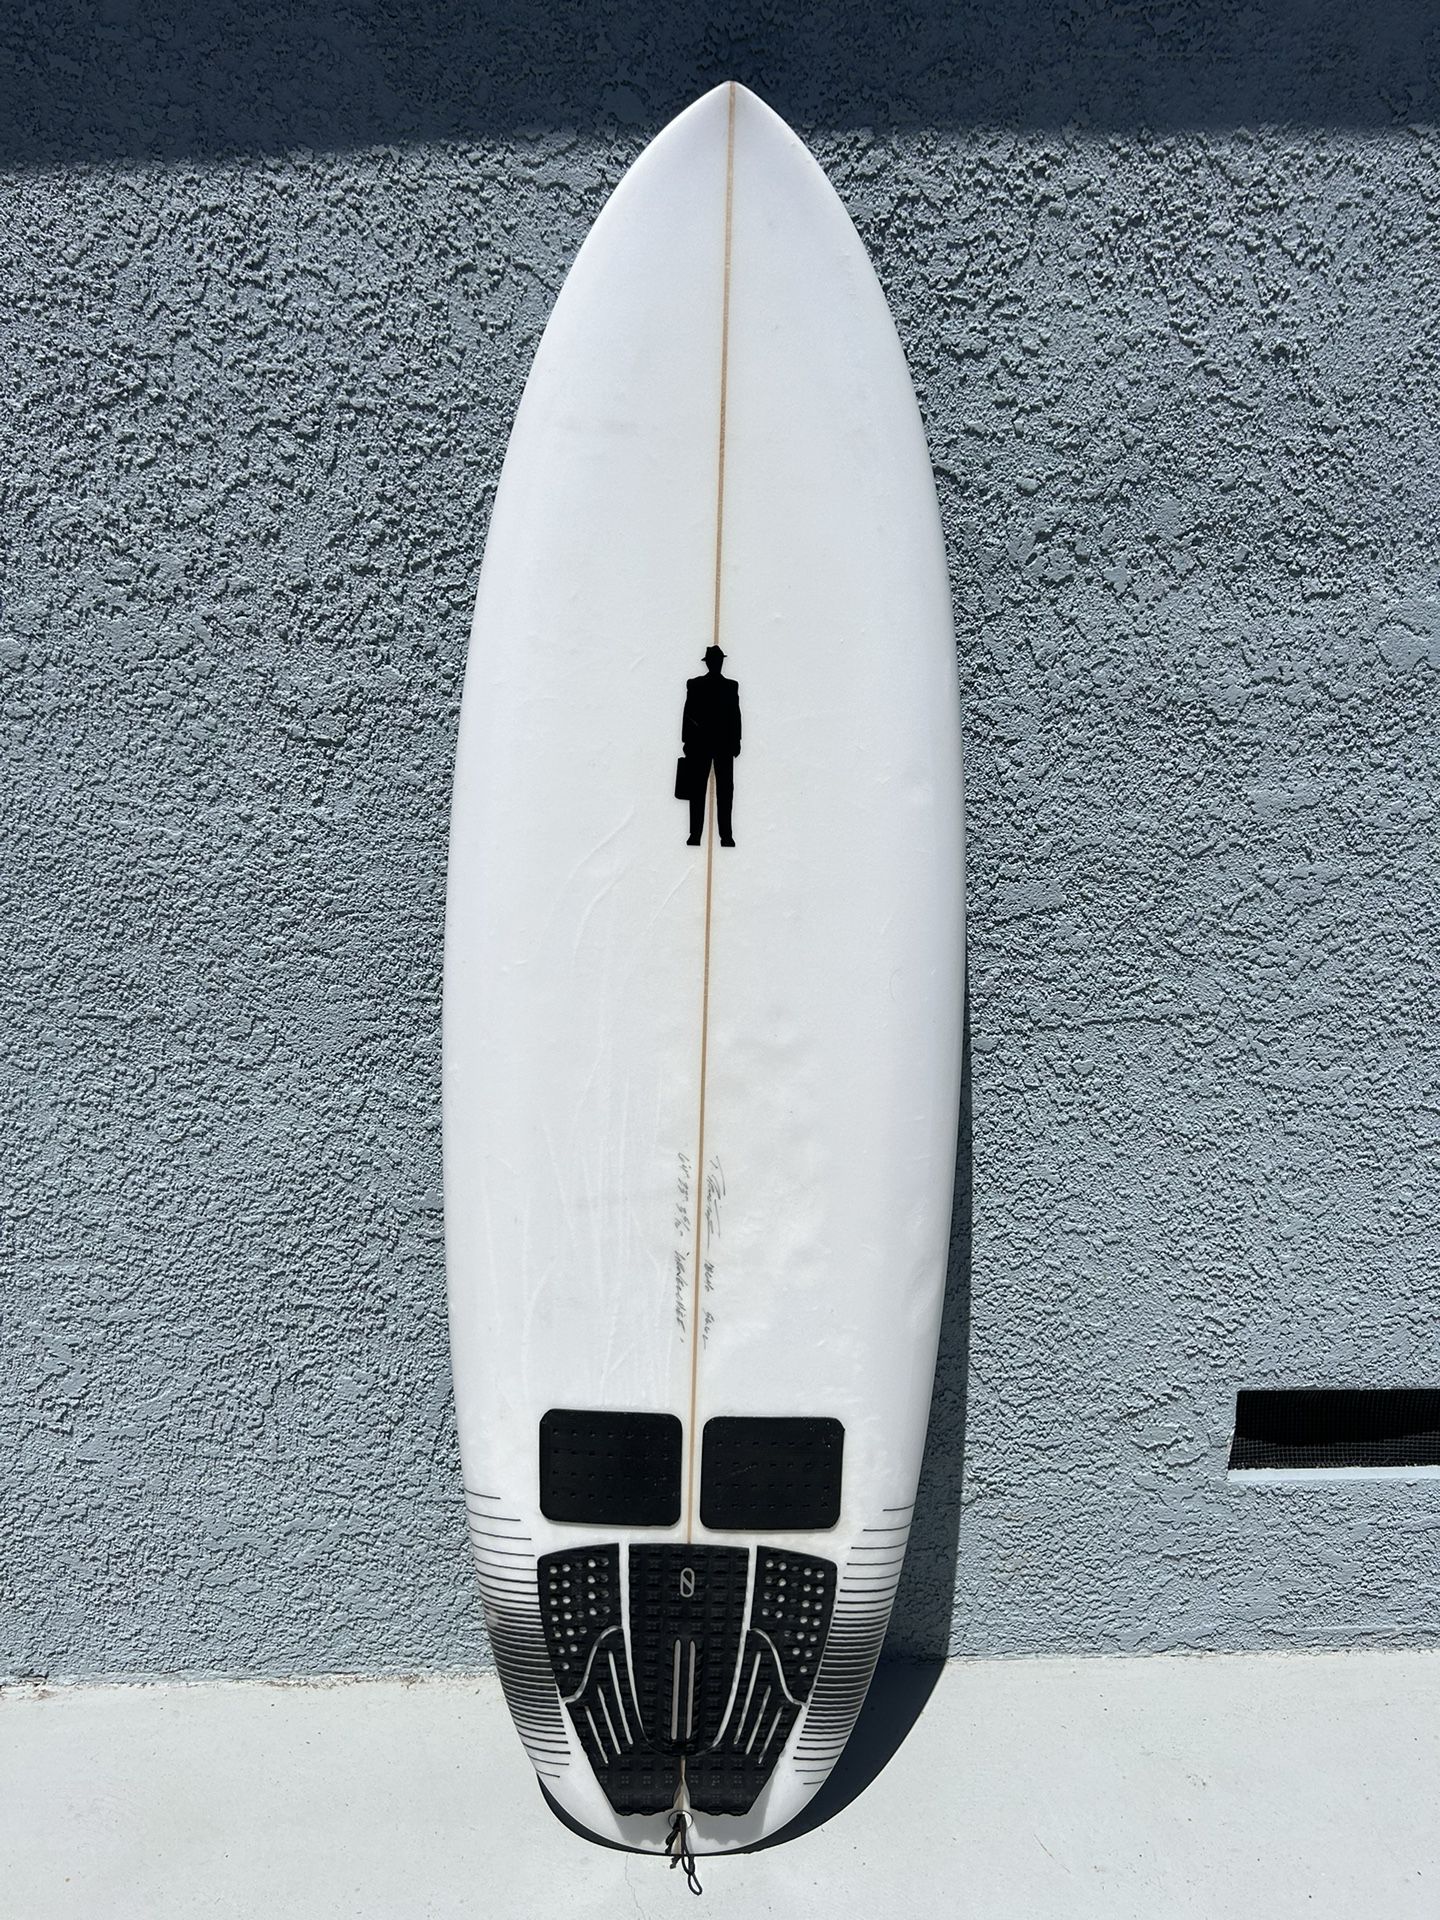 Proctor Surfboard